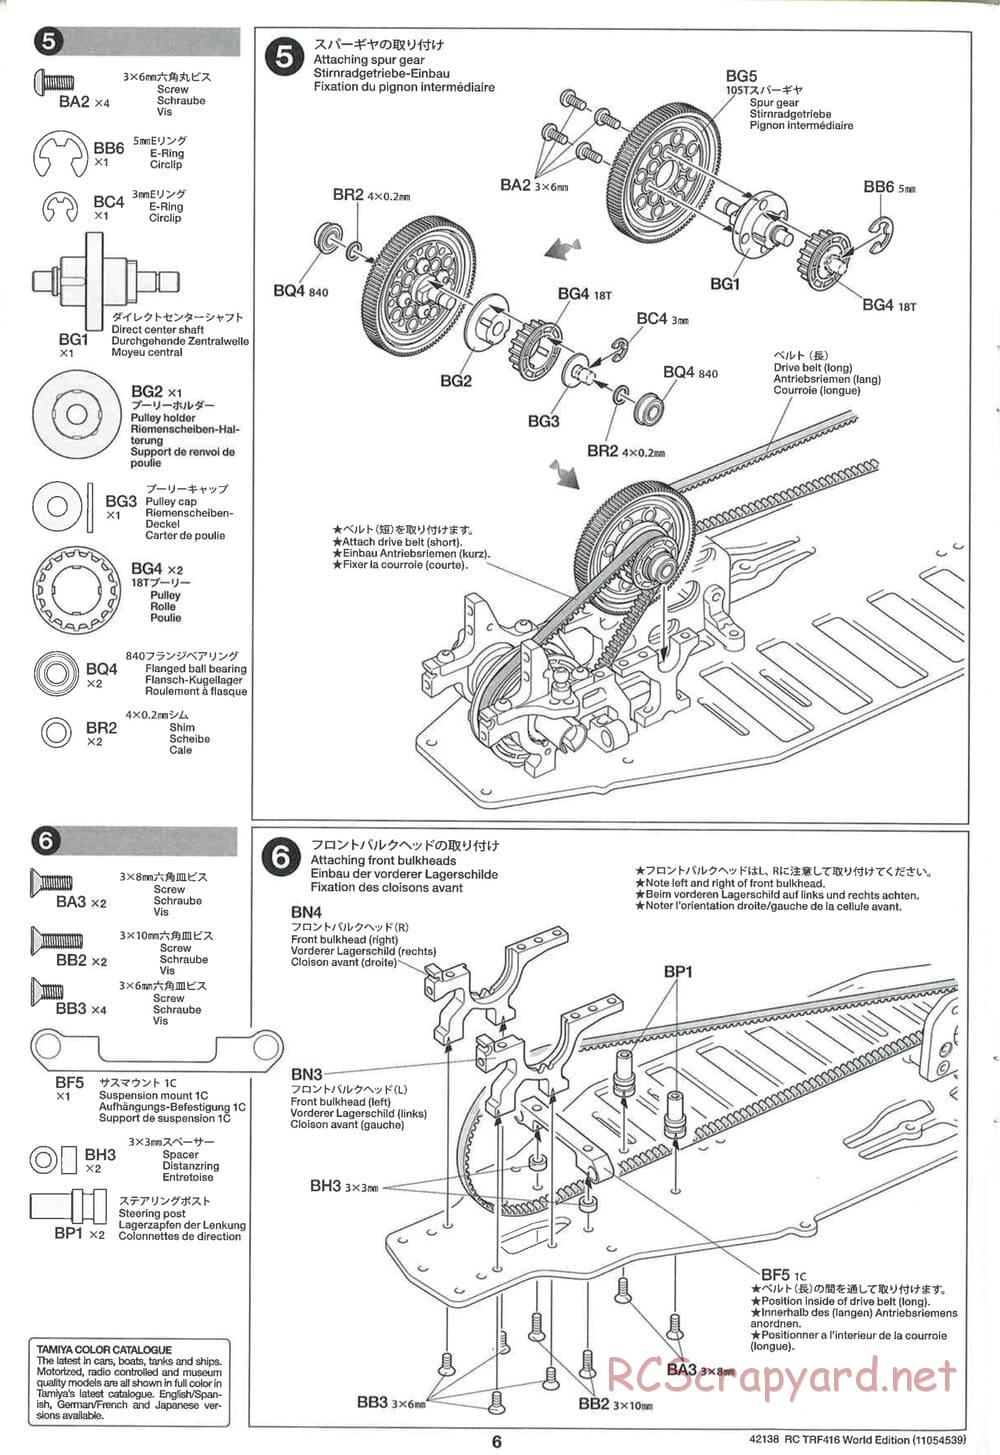 Tamiya - TRF416 World Edition Chassis - Manual - Page 6